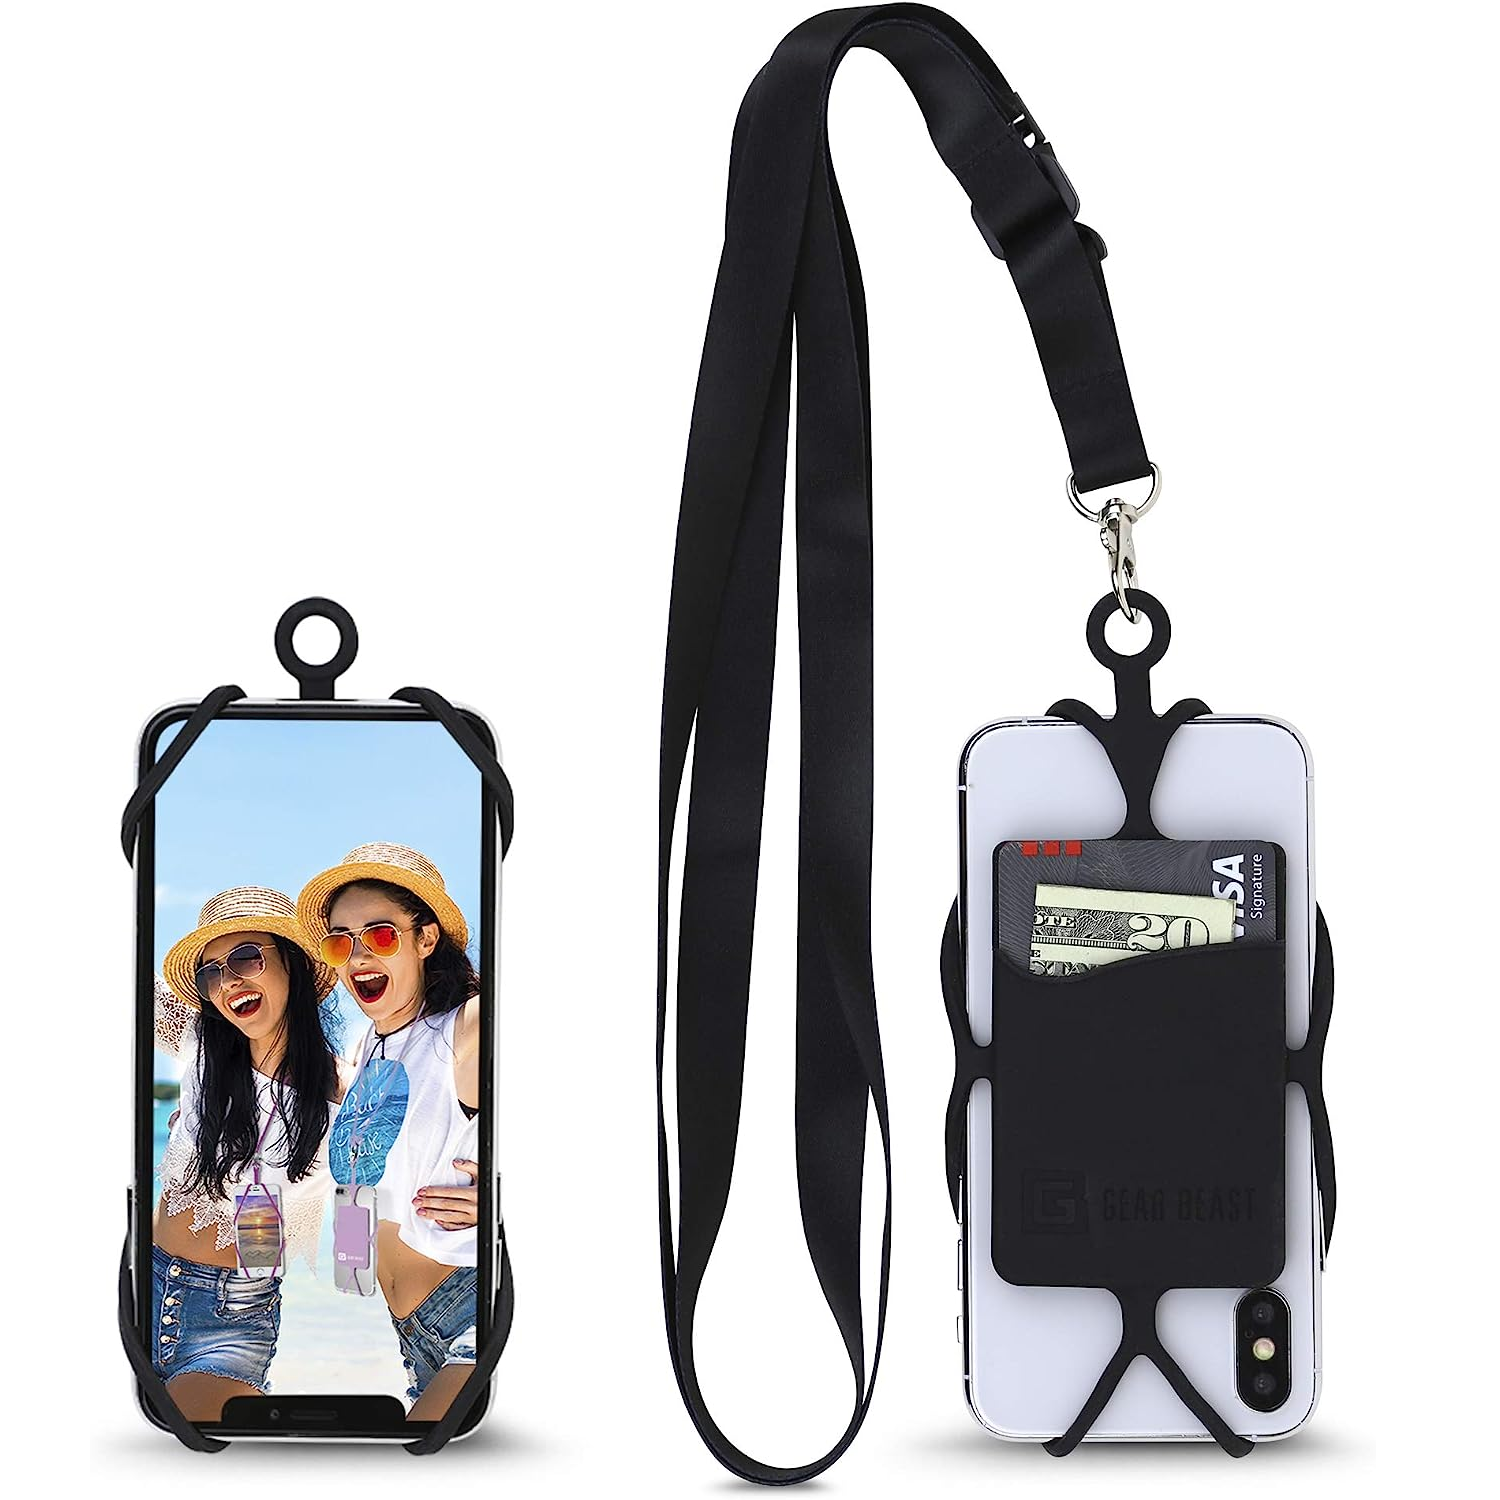 Lanyard Phones Cameras, Accessories Phone Strap